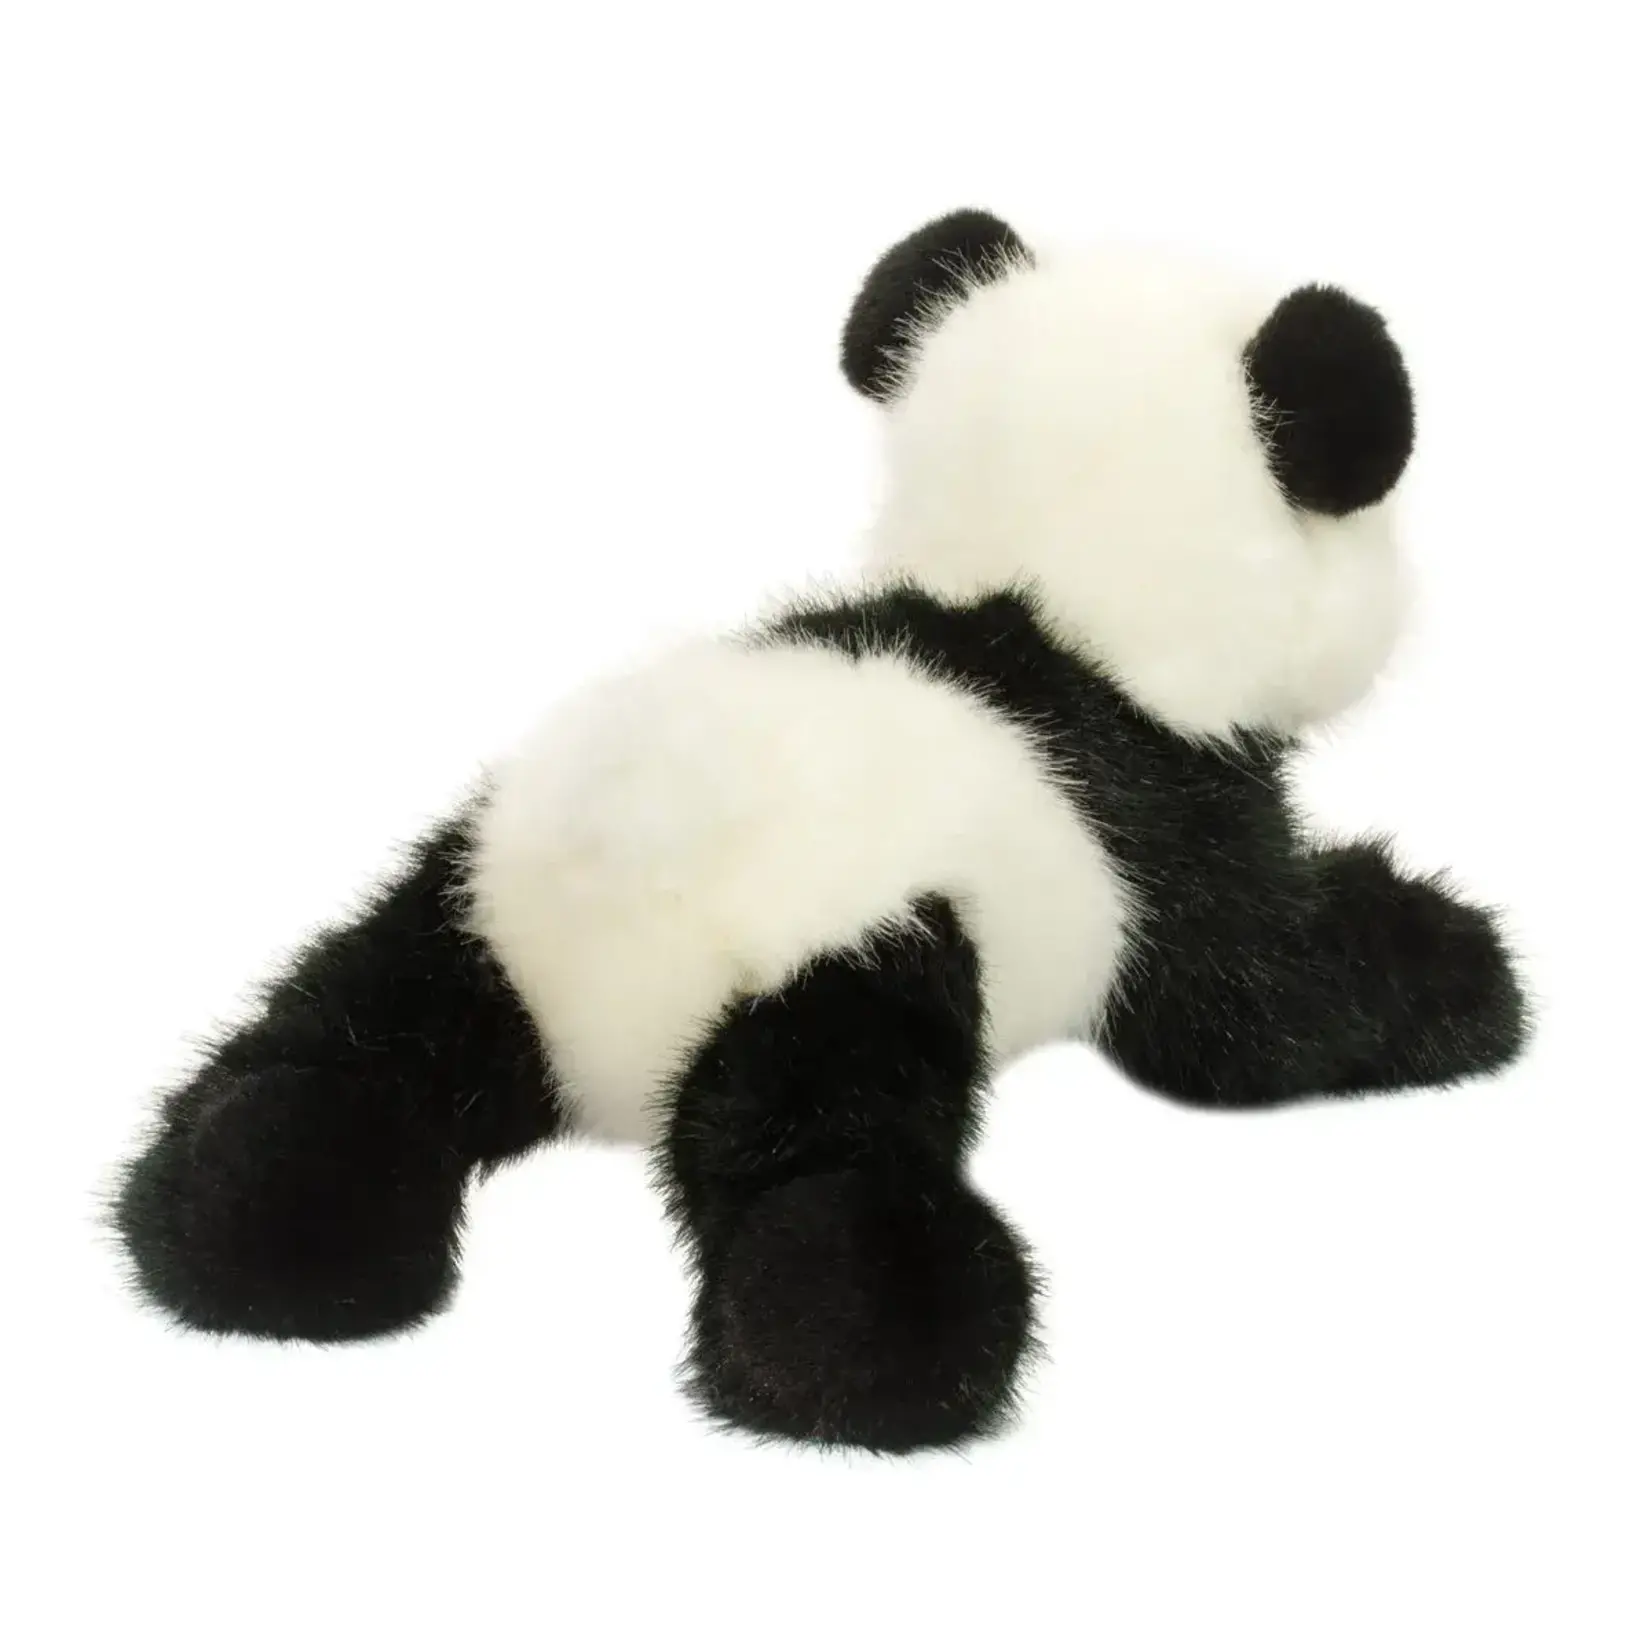 Wasabi Panda Plush